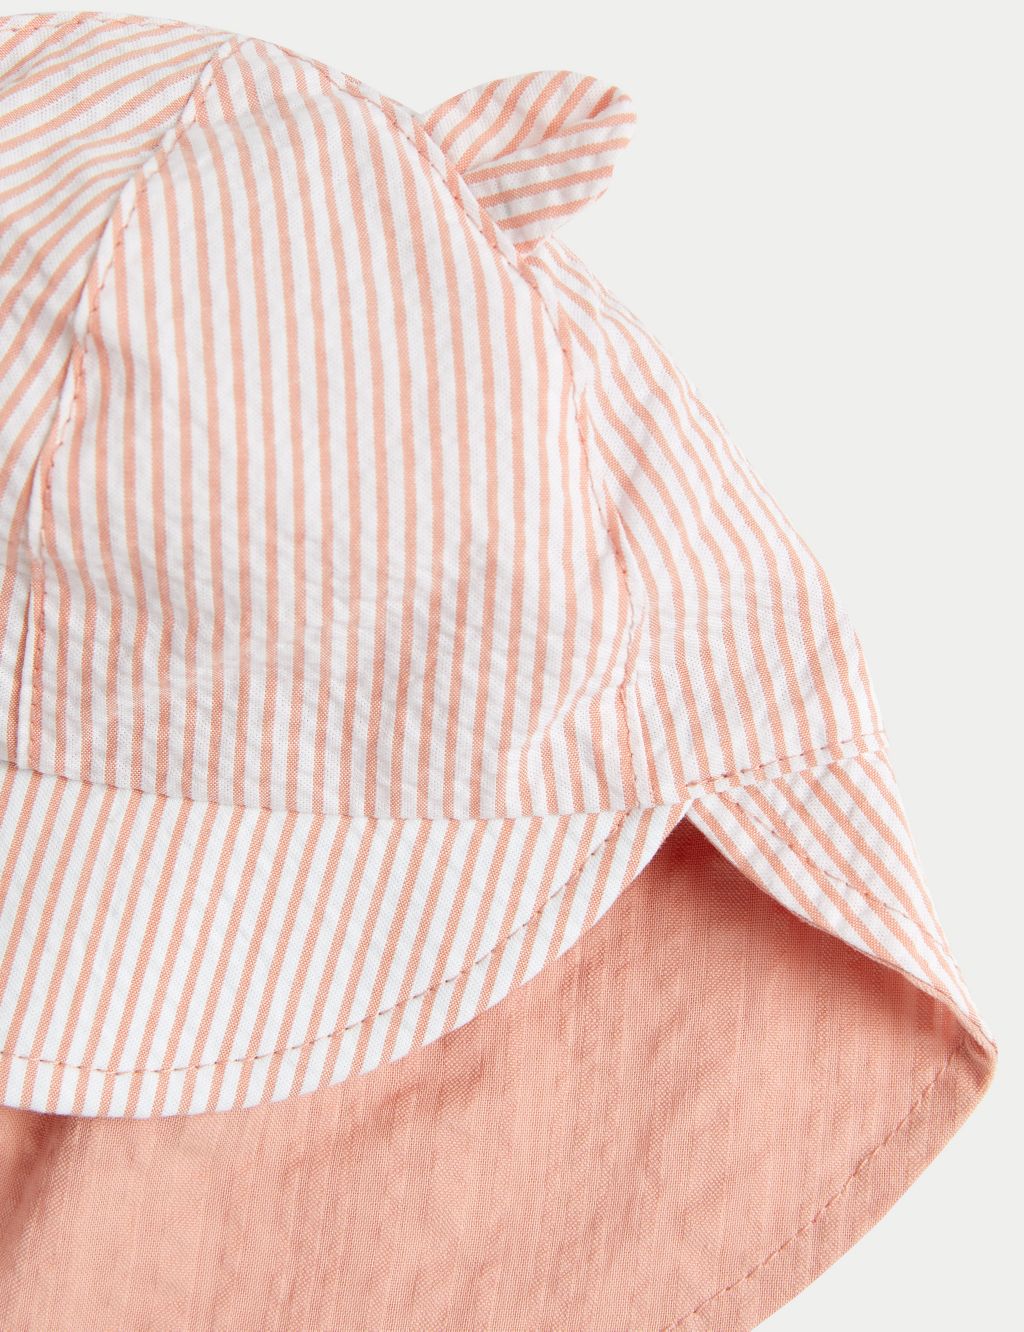 Kids' Pure Cotton Reversible Sun Hat (1-6 Yrs) image 3